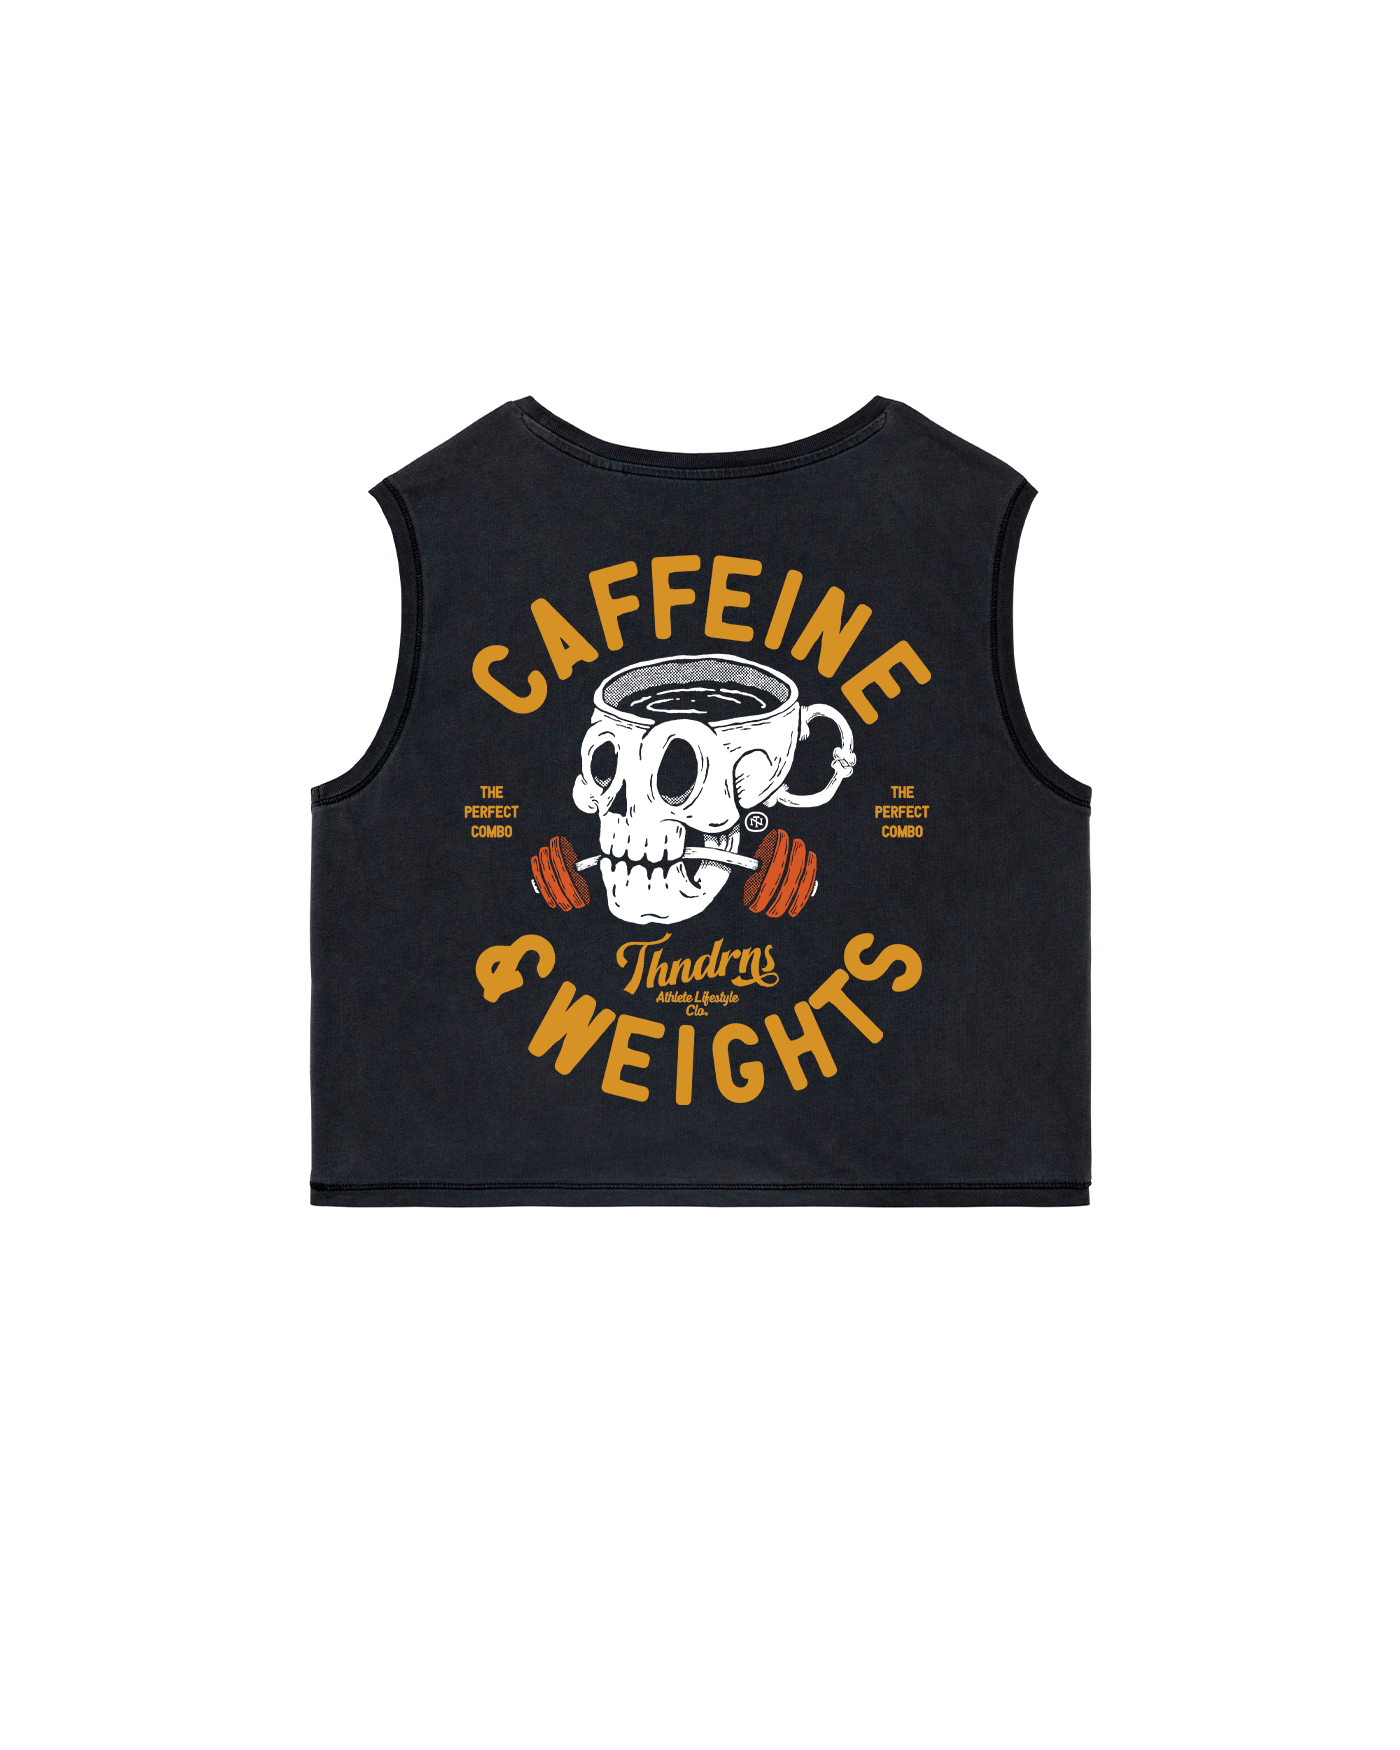 Caffeine & Weights Cropped Tank Top